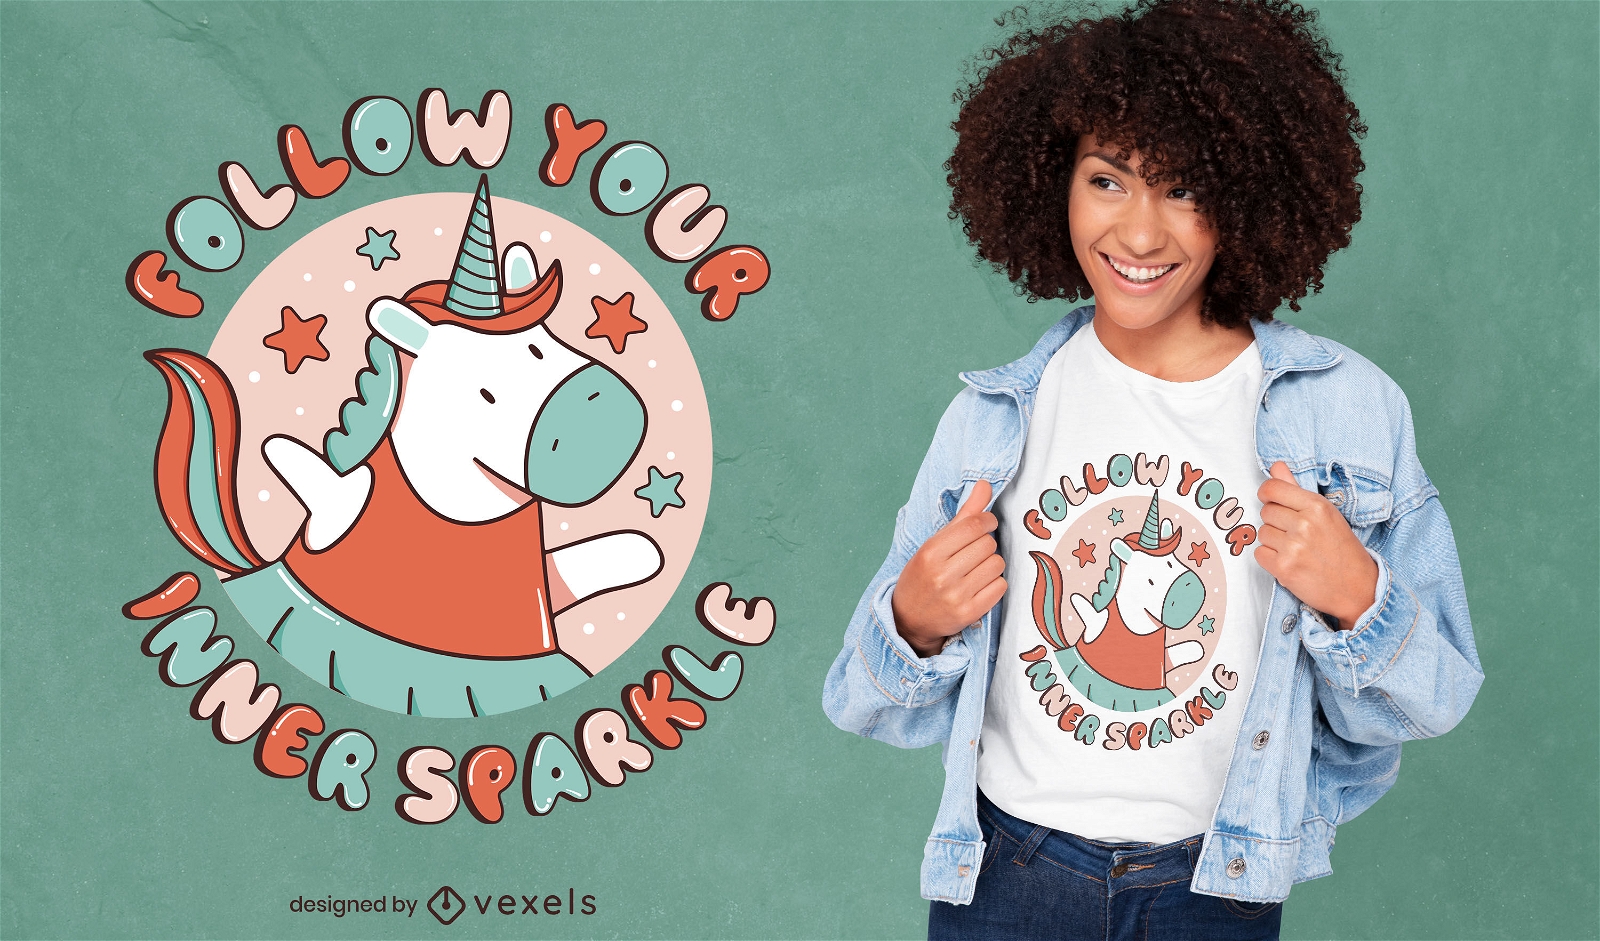 Cute motivational unicorn t-shirt design